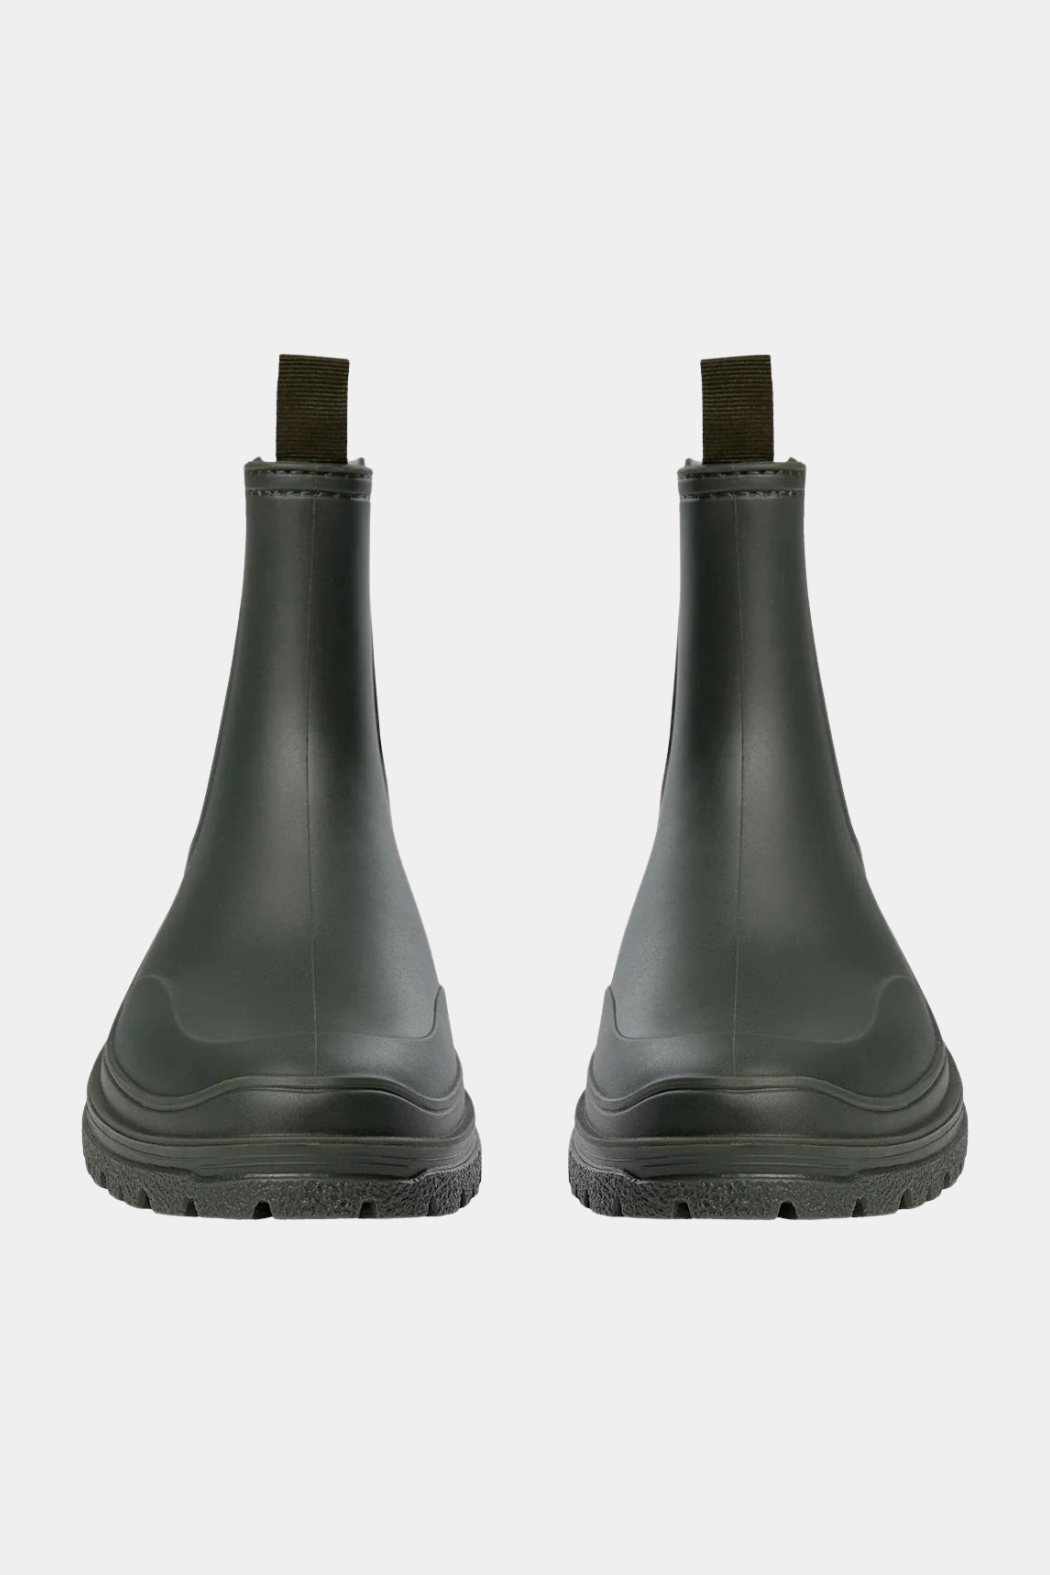 T427 rubber boots, dark green